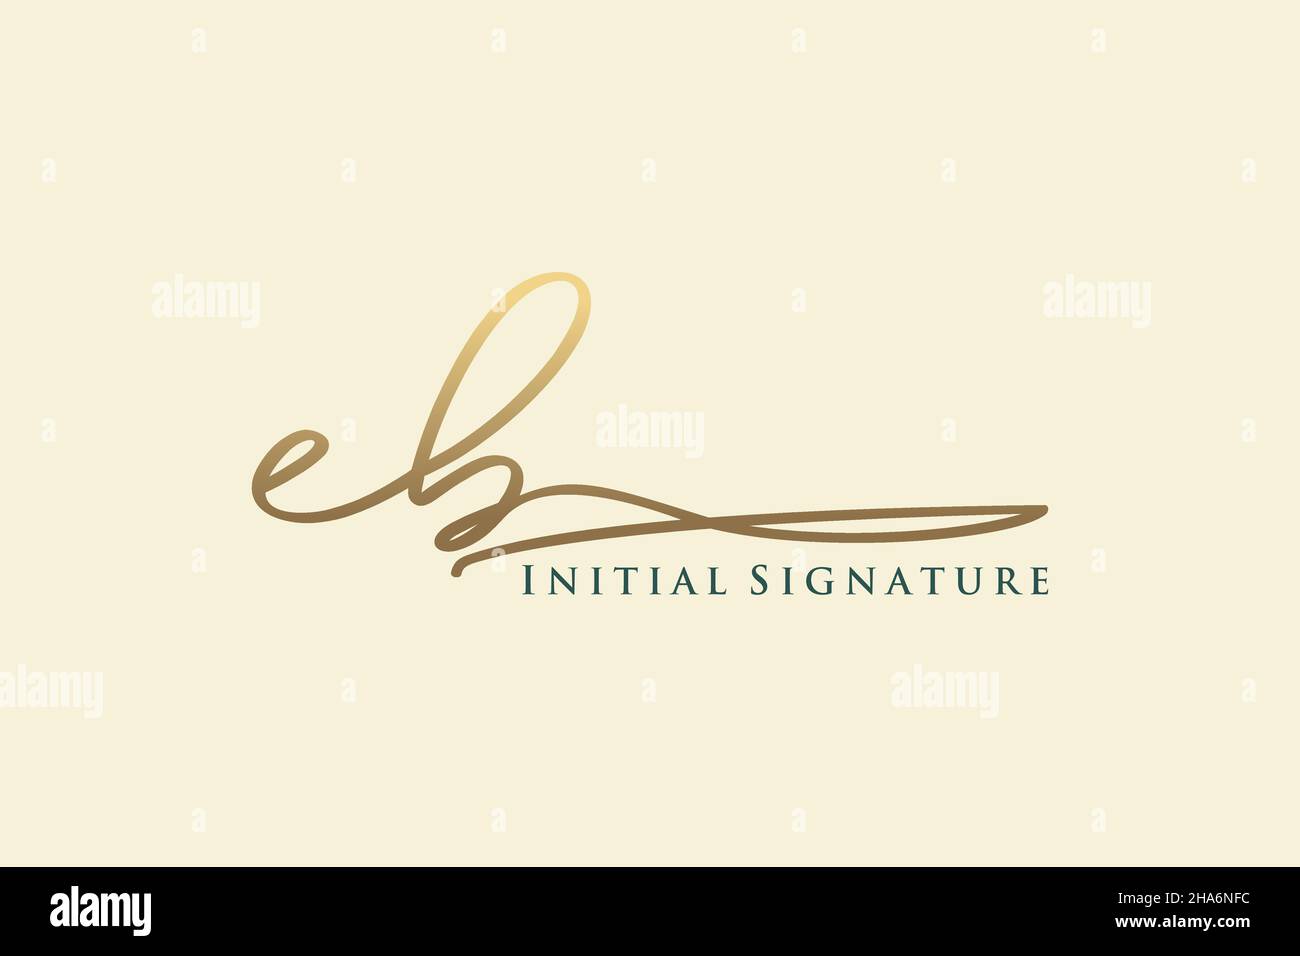 EB Letter Signature Logo Template elegant design logo. Hand drawn Calligraphy lettering Vector illustration. Stock Vector